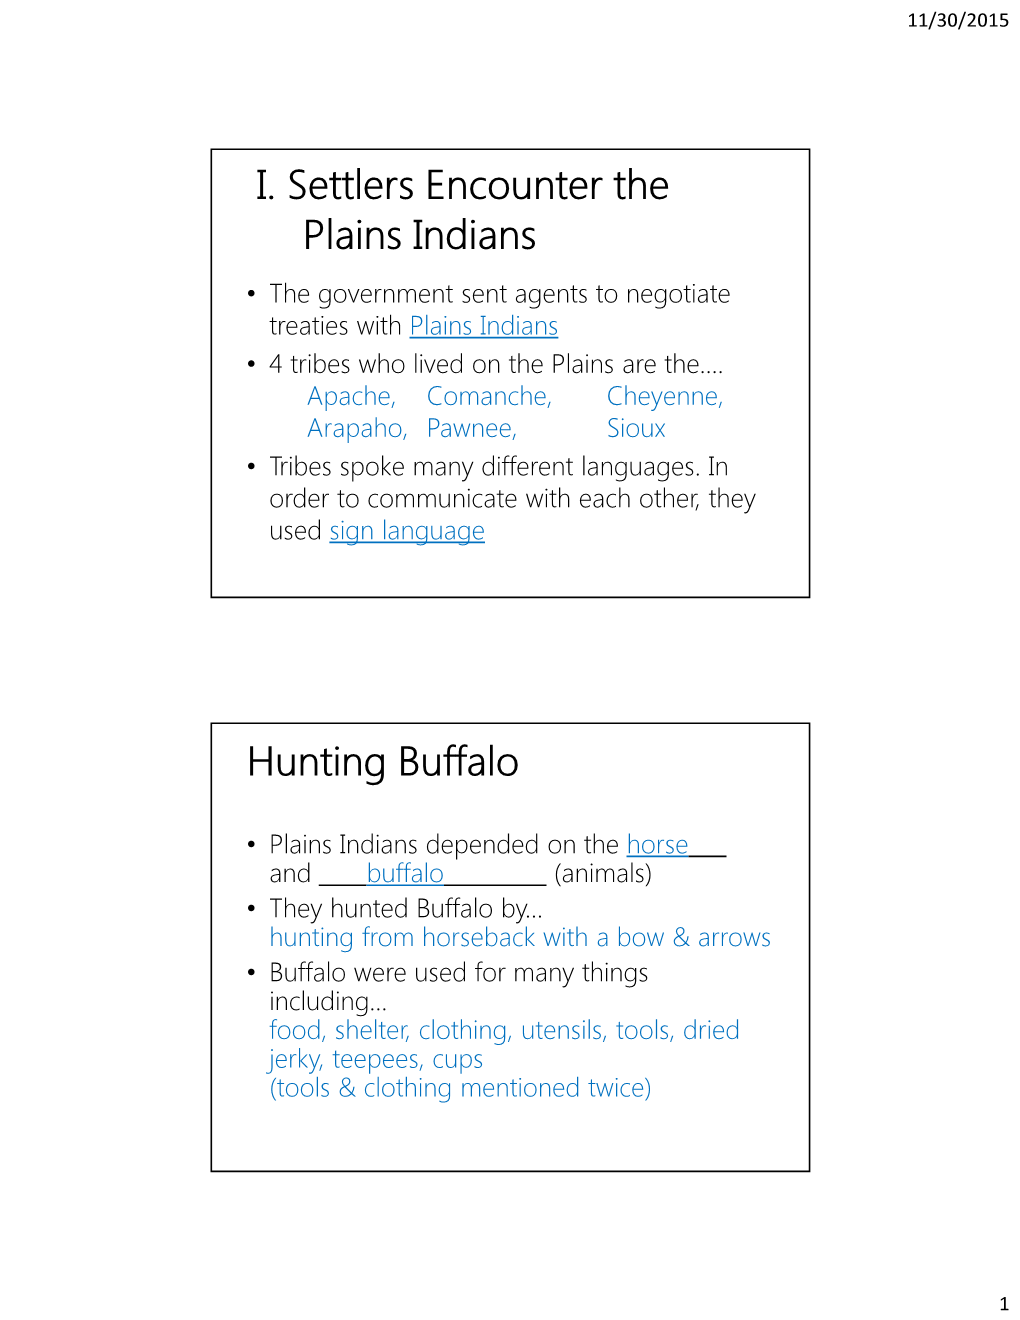 I. Settlers Encounter the Plains Indians Hunting Buffalo